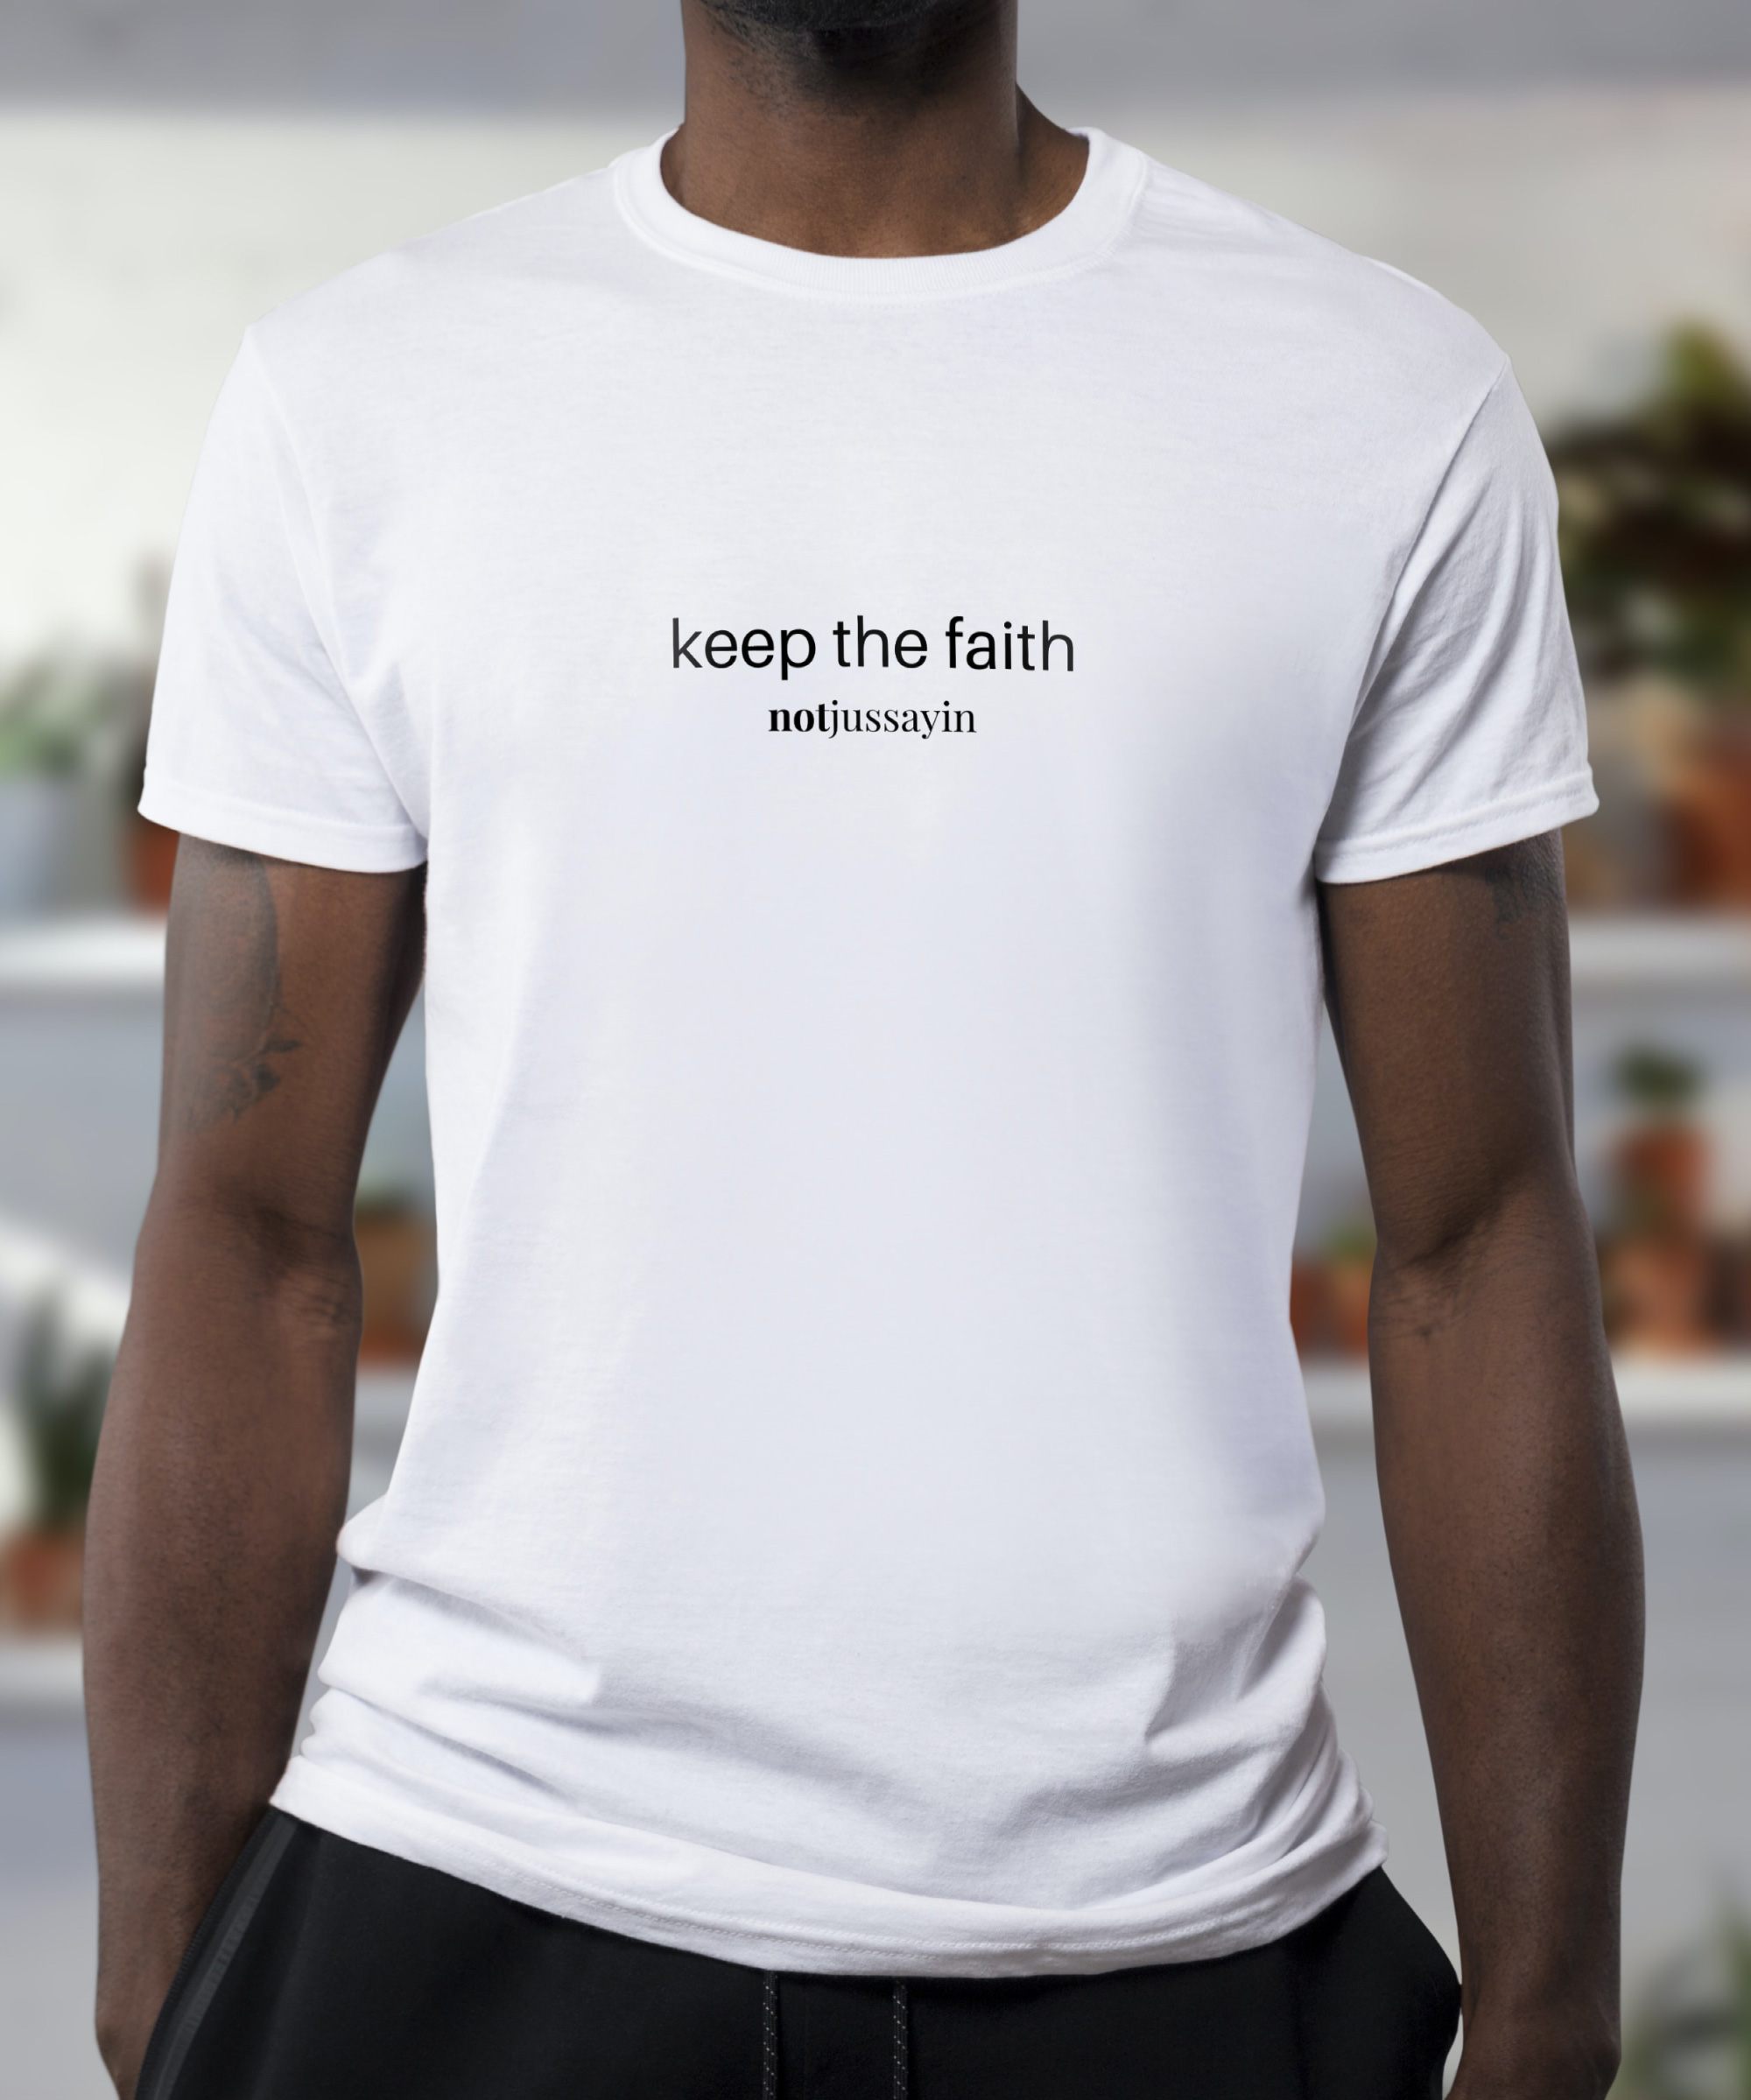 Keep the faith quote t shirt